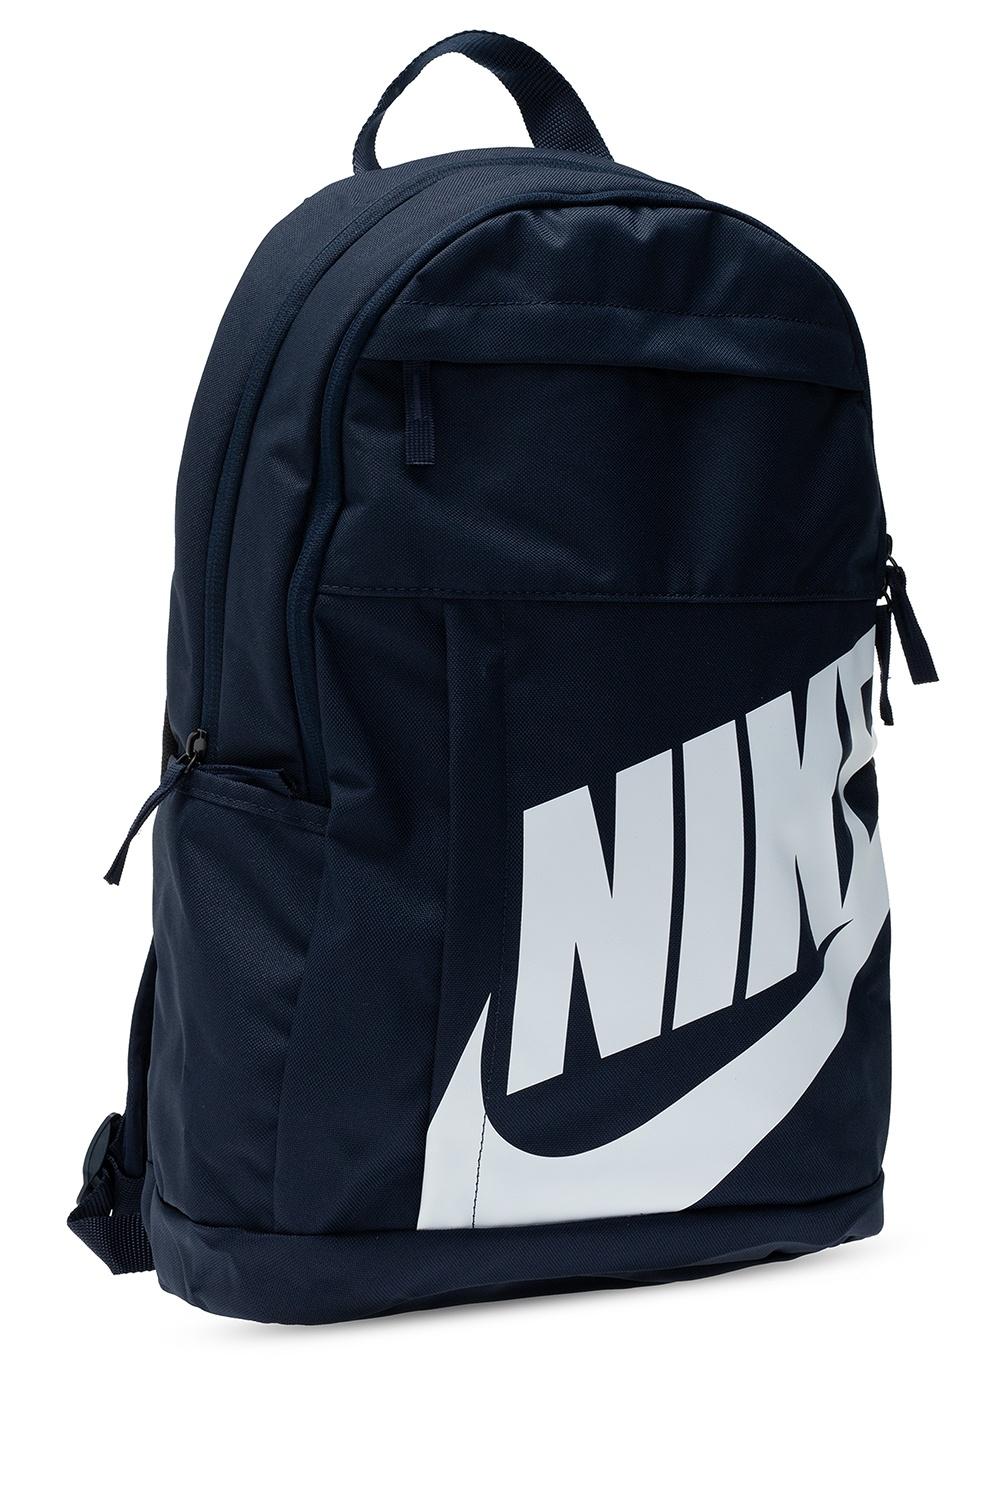 Nike Elemental Backpack 2.0 in Navy Blue (White) | Lyst